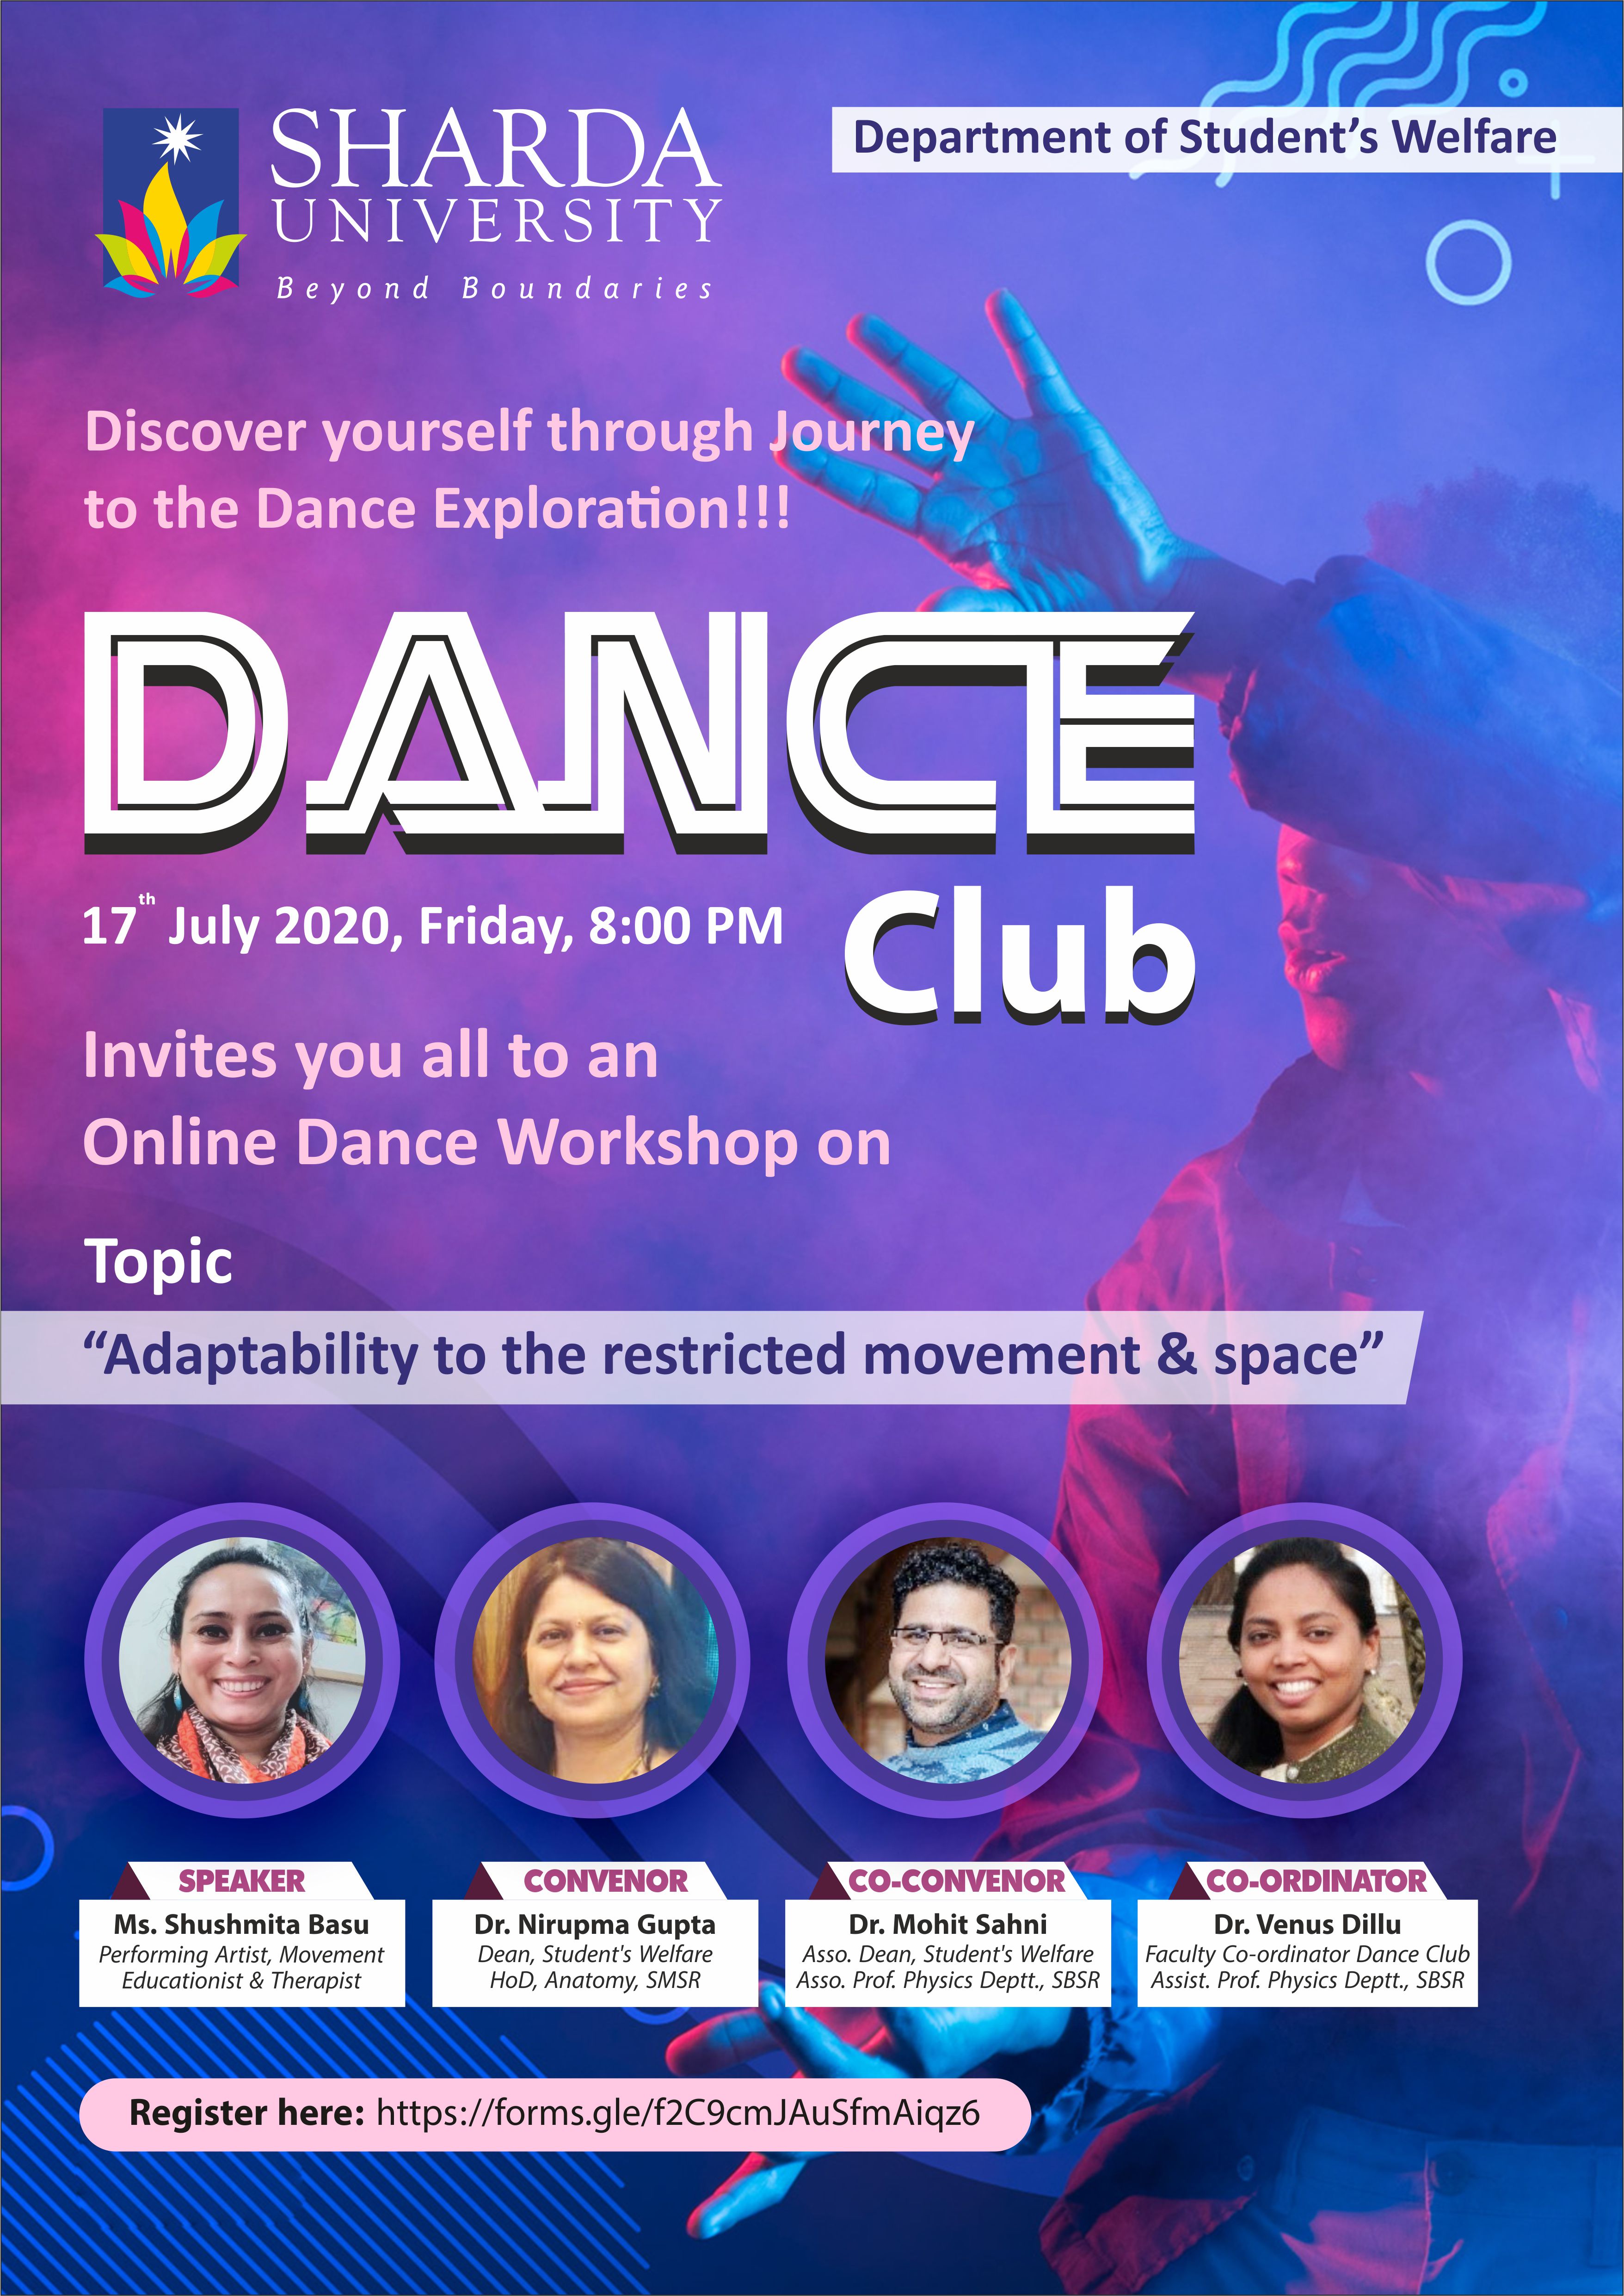 Dance club Online Dance work shop 17th July 2020